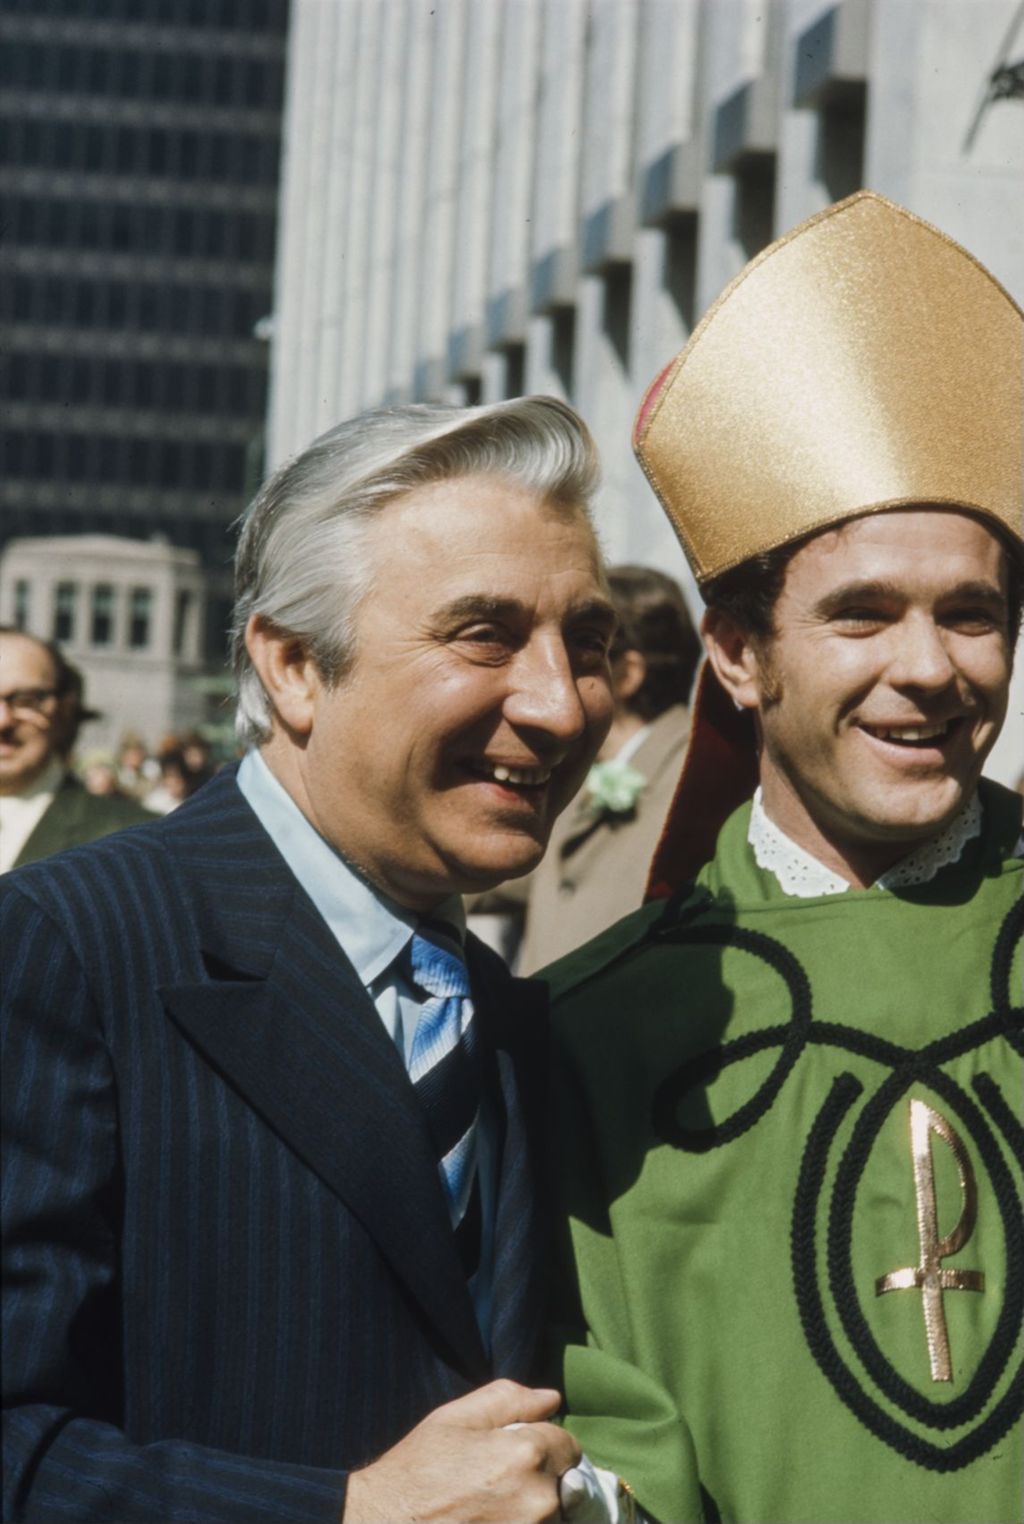 St. Patrick's Day Parade, Roman Pucinski with man dressed as St. Patrick